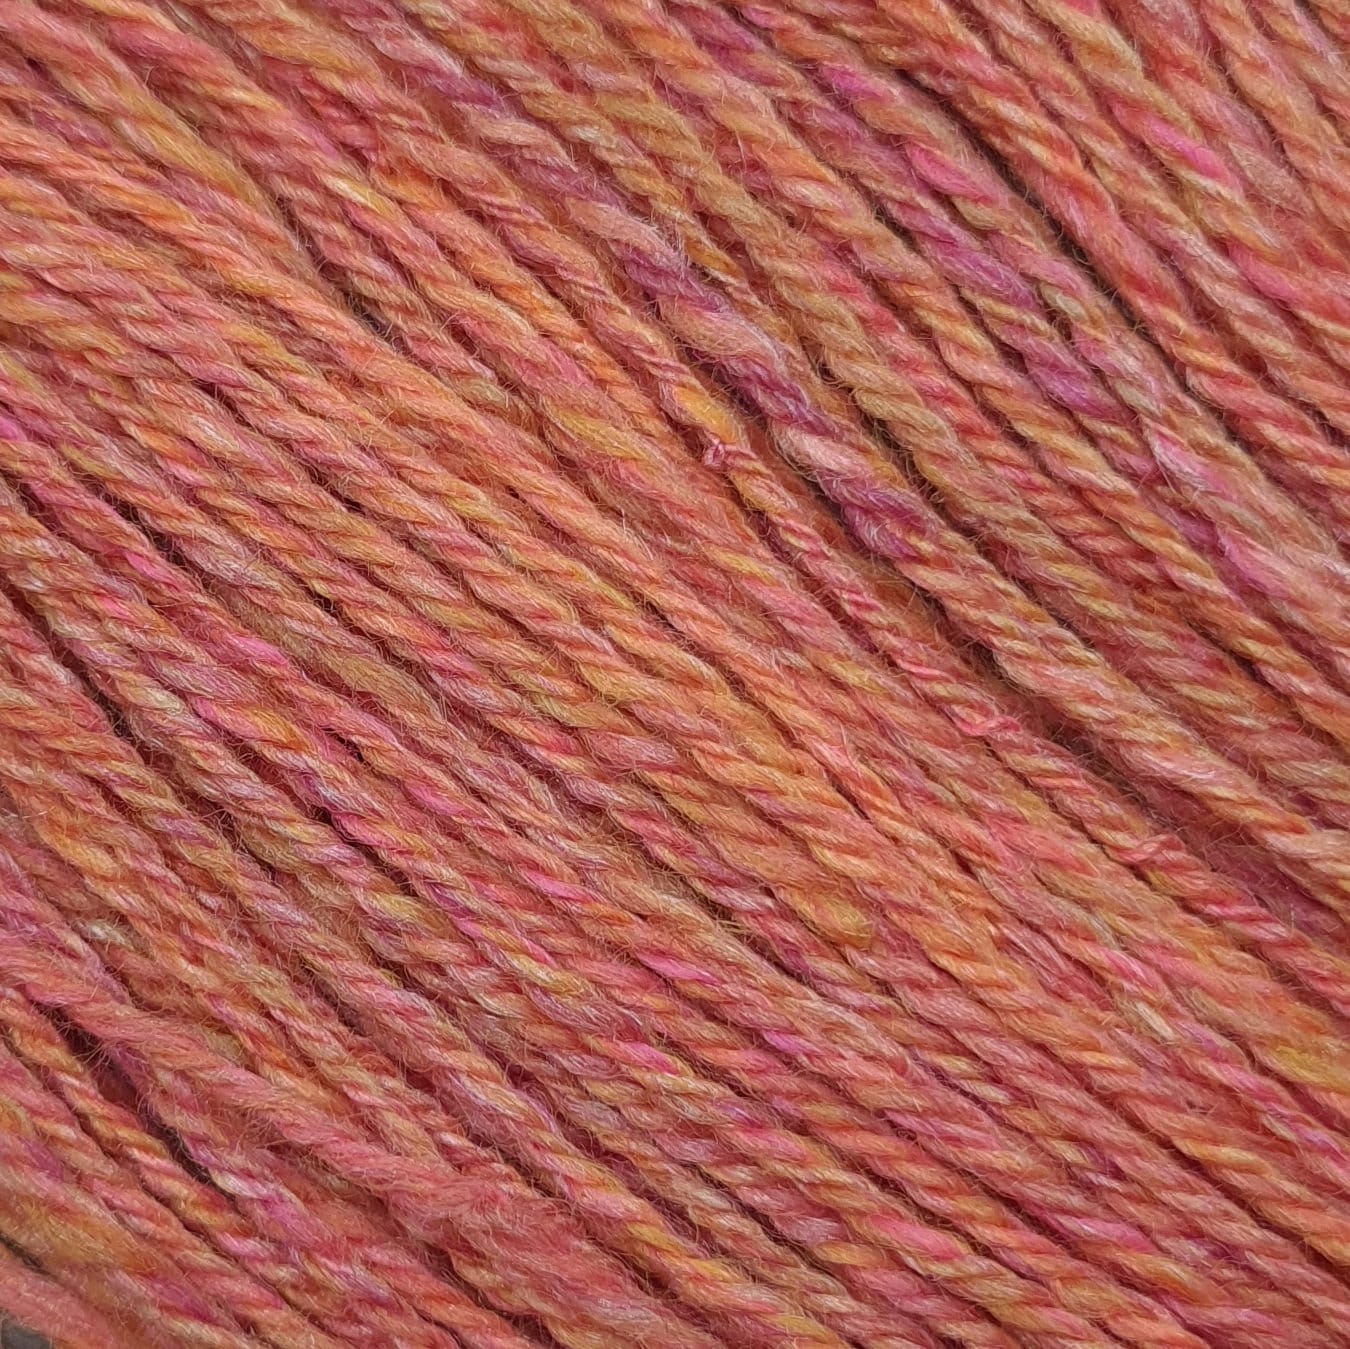 Handspun Worsted/Aran yarn, 20g mini skein, merino wool & silk, orange and pink,